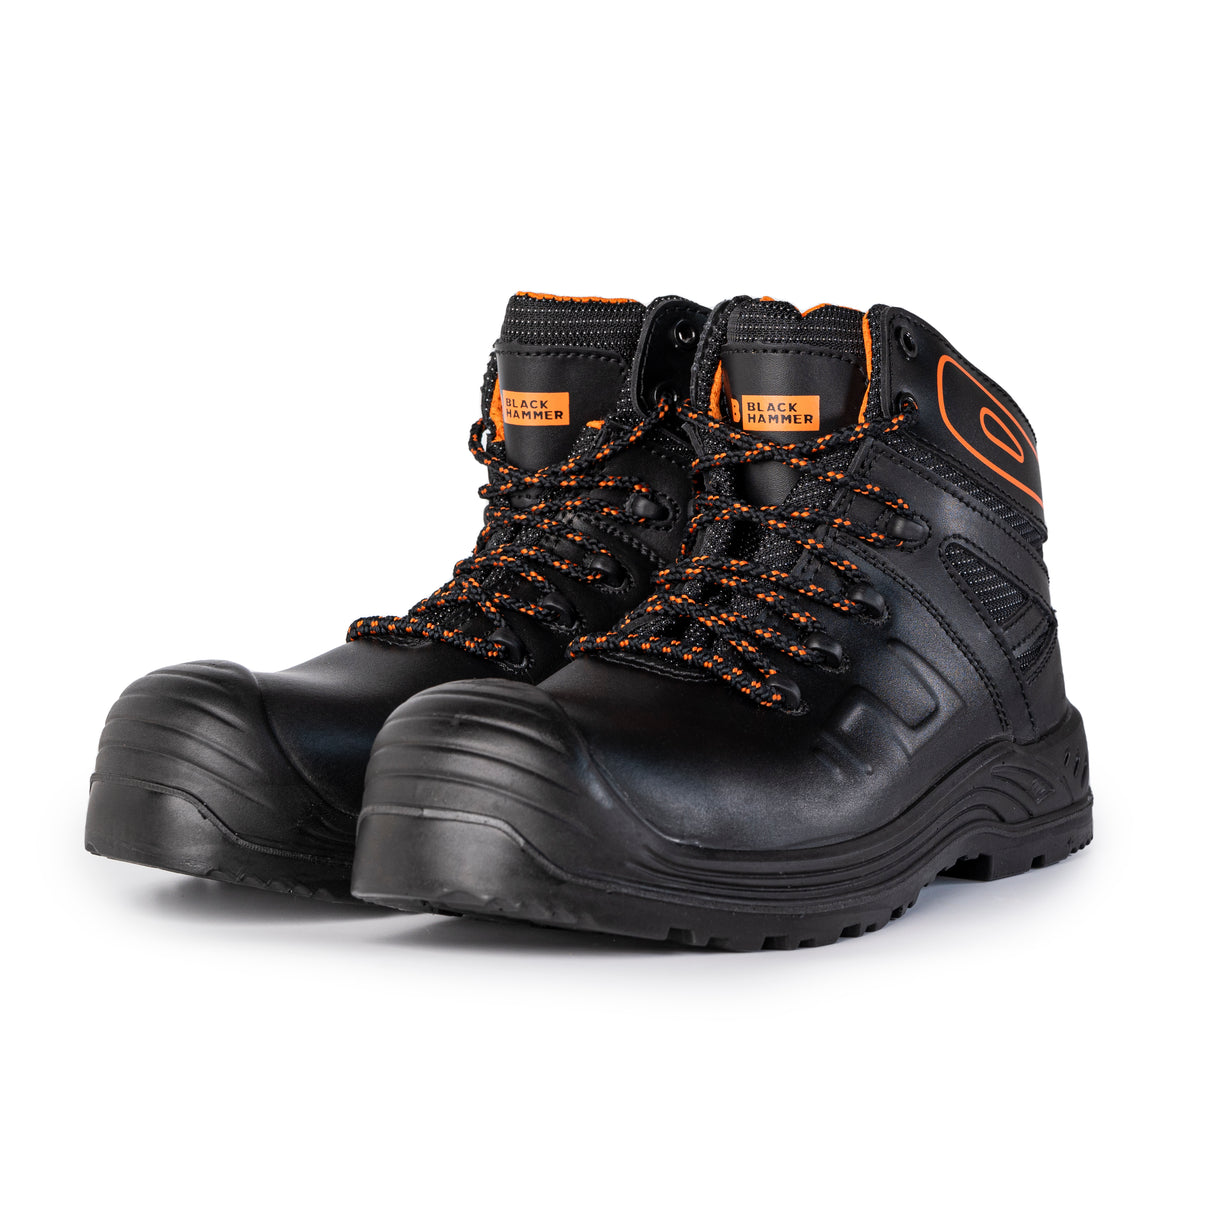 Black Hammer Mens Composite Lightweight Safety Boots